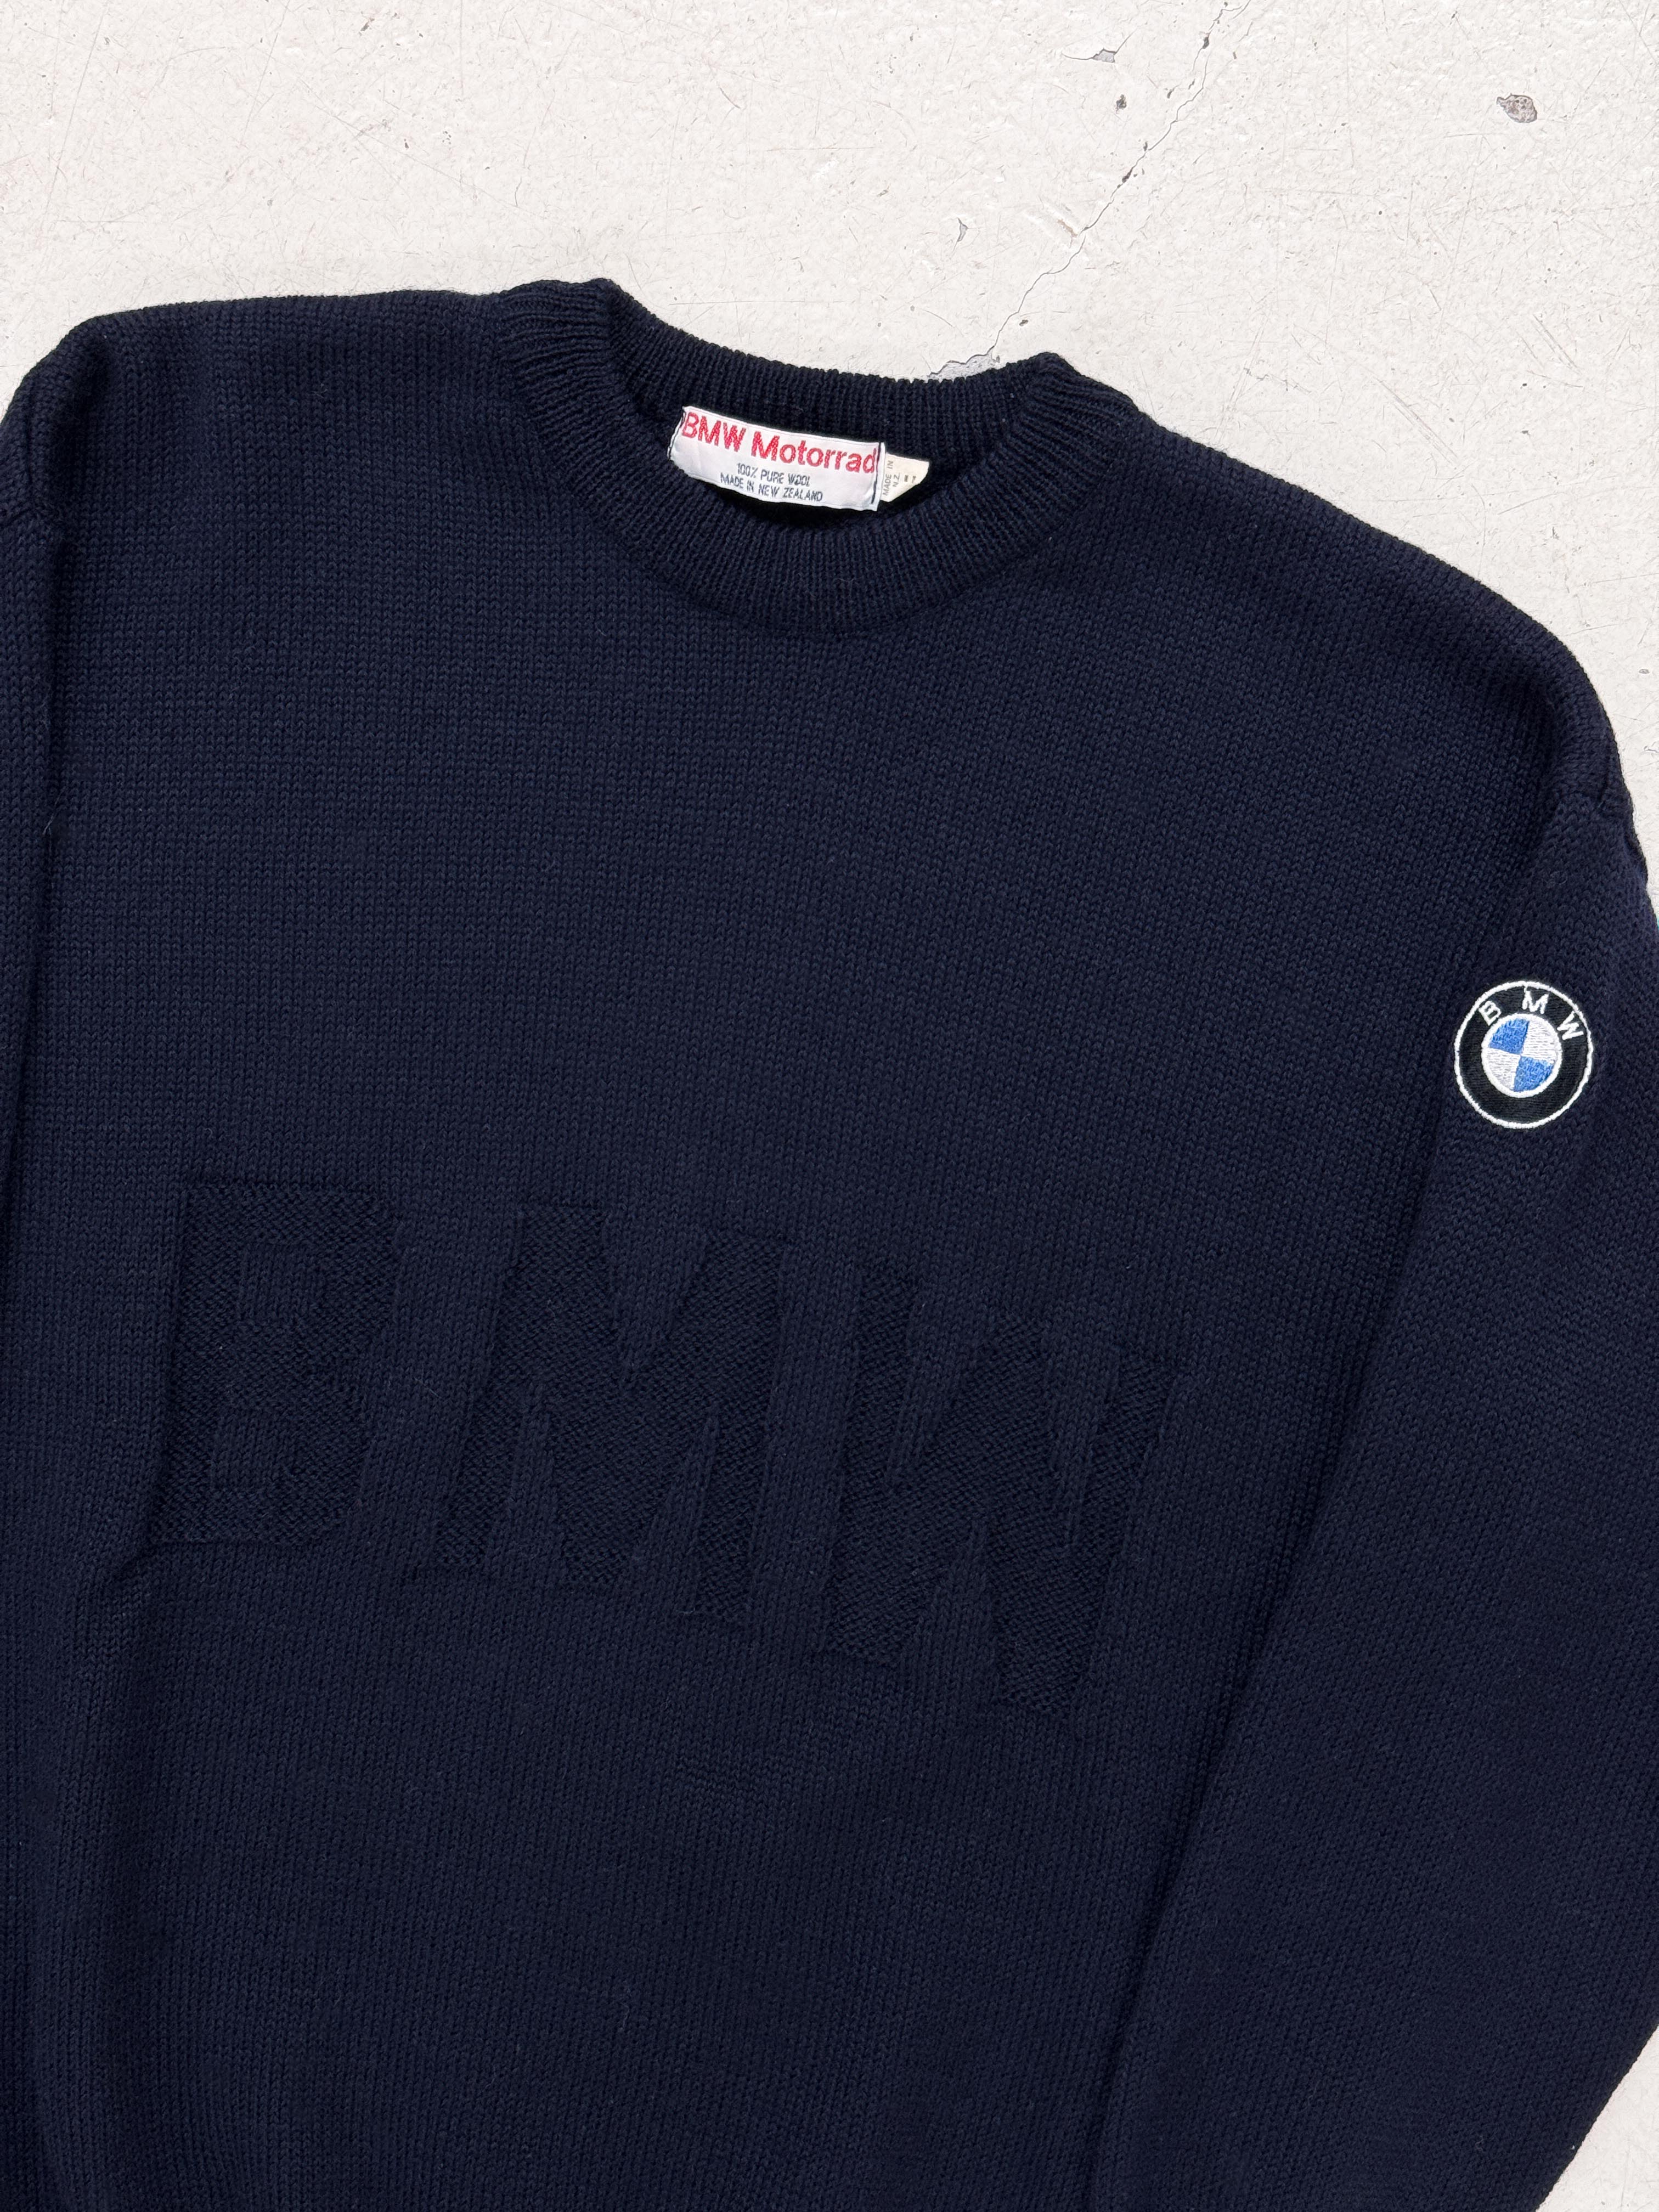 BMW motorrad sweater